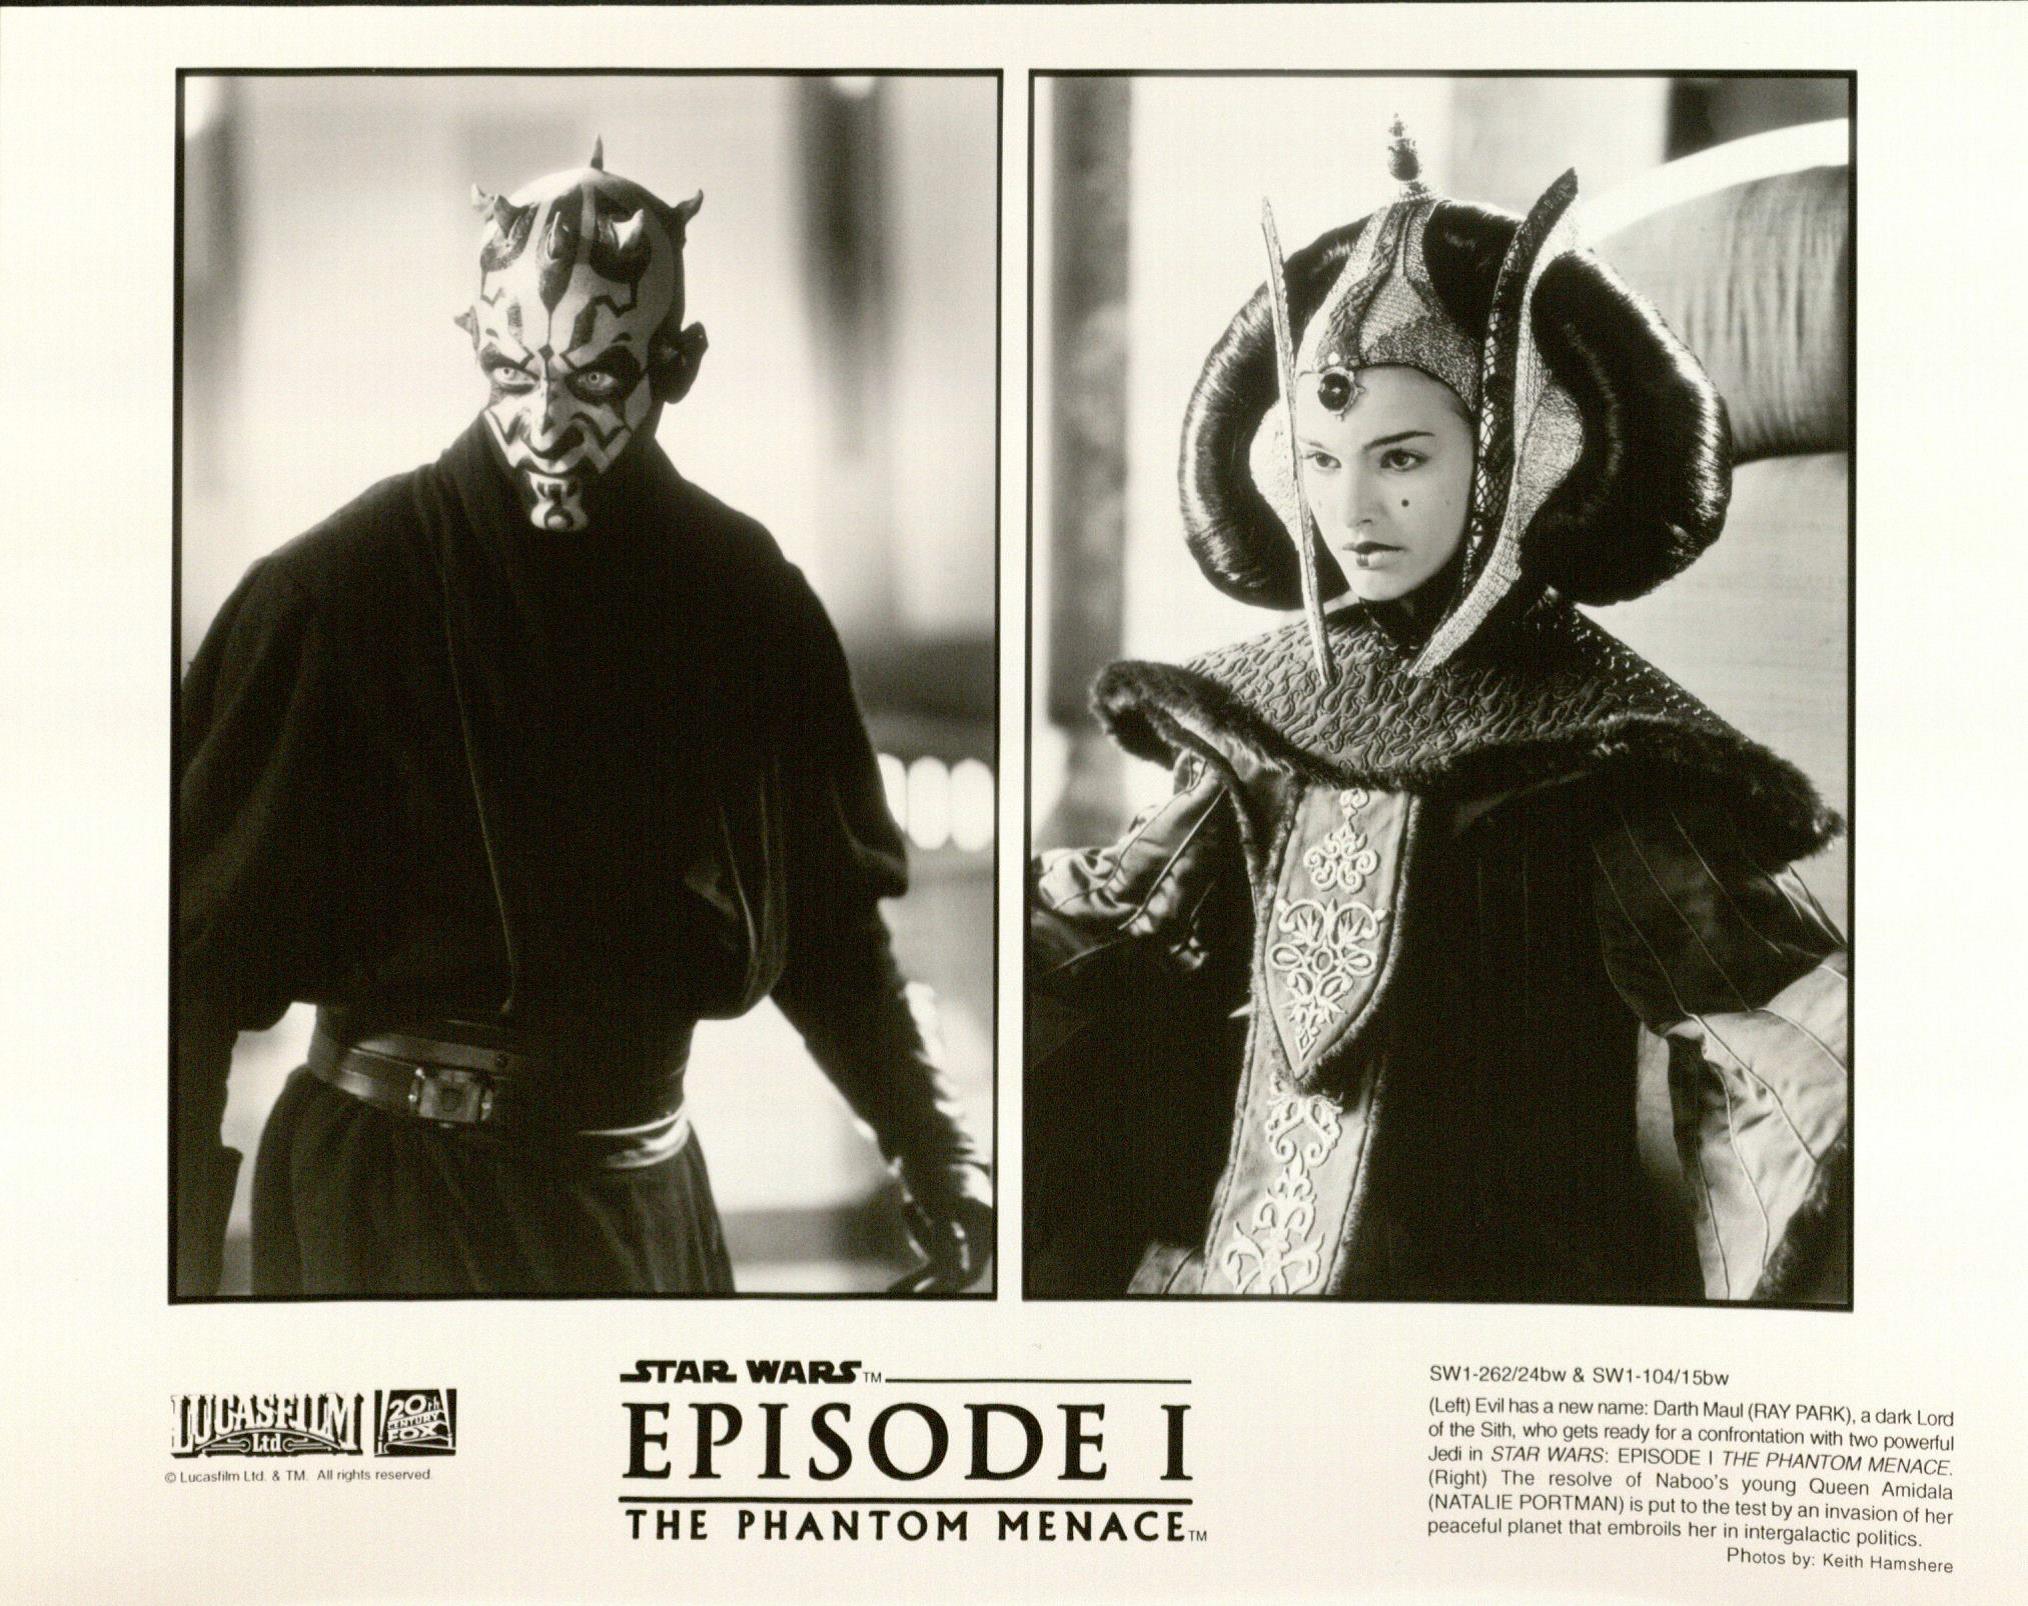 Star Wars Episode I: the Phantom Menace stills depicting Darth Maul and Queen Amidala, 1999. 